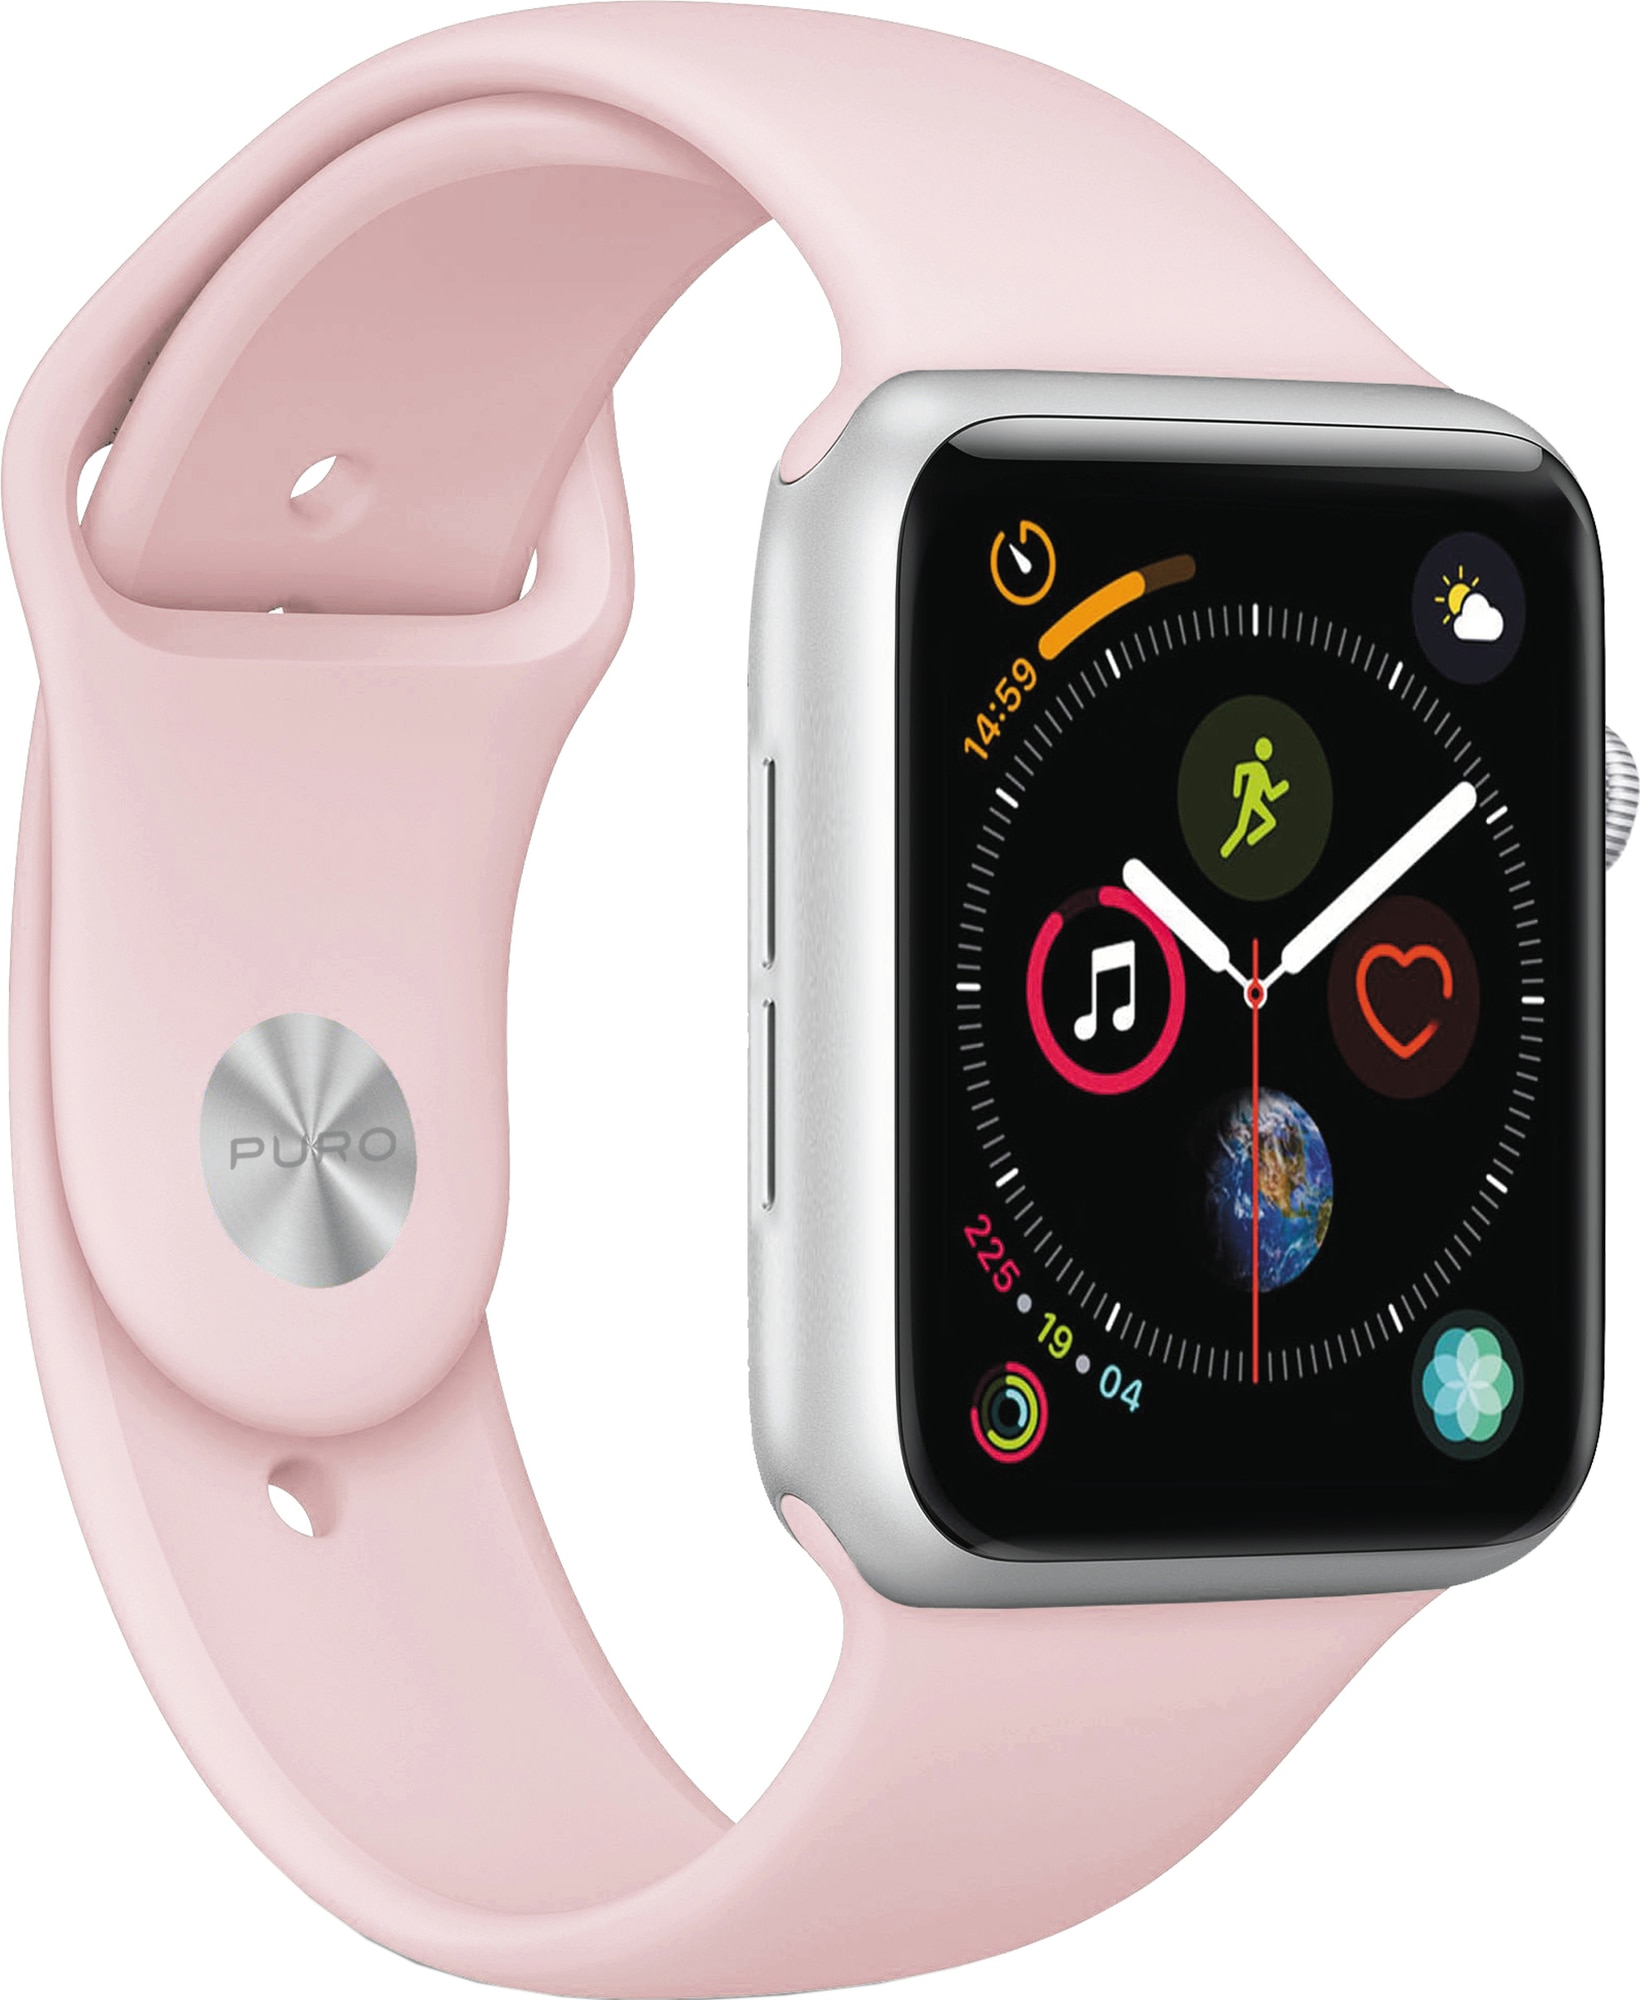 Puro Icon silikon sportarmband för Apple Watch 38-41 mm (rose) - Elgiganten